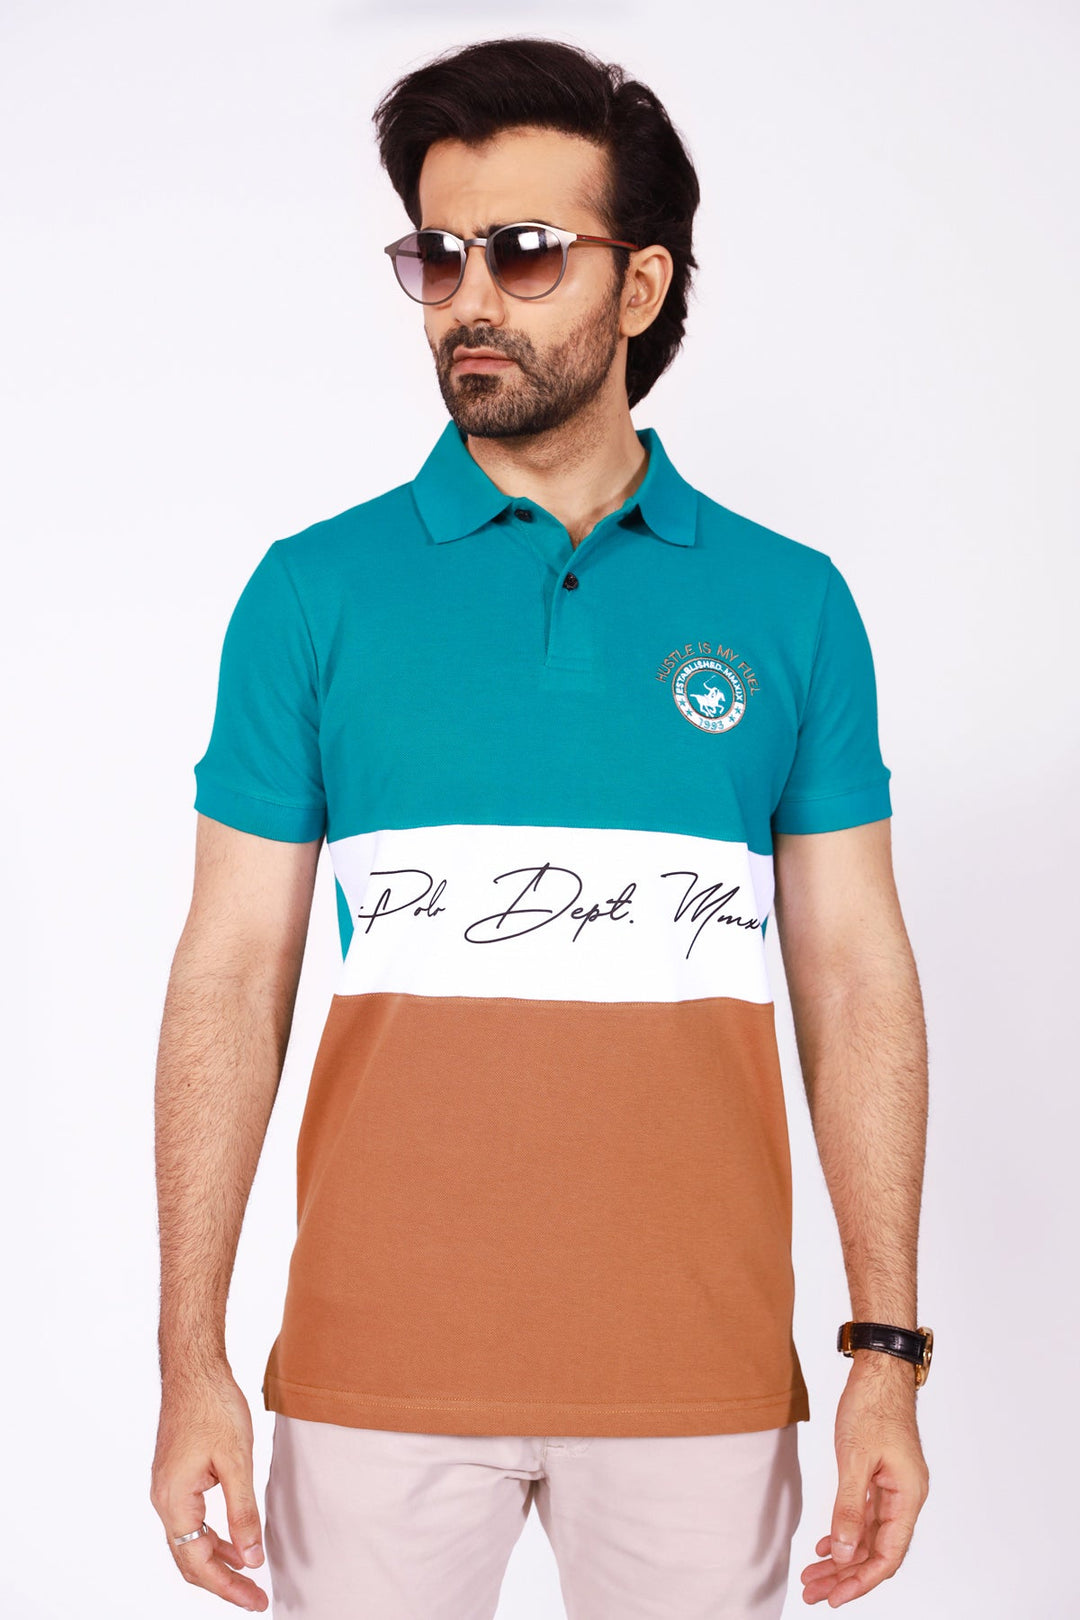 Mens Polo Shirts Online Pakistan